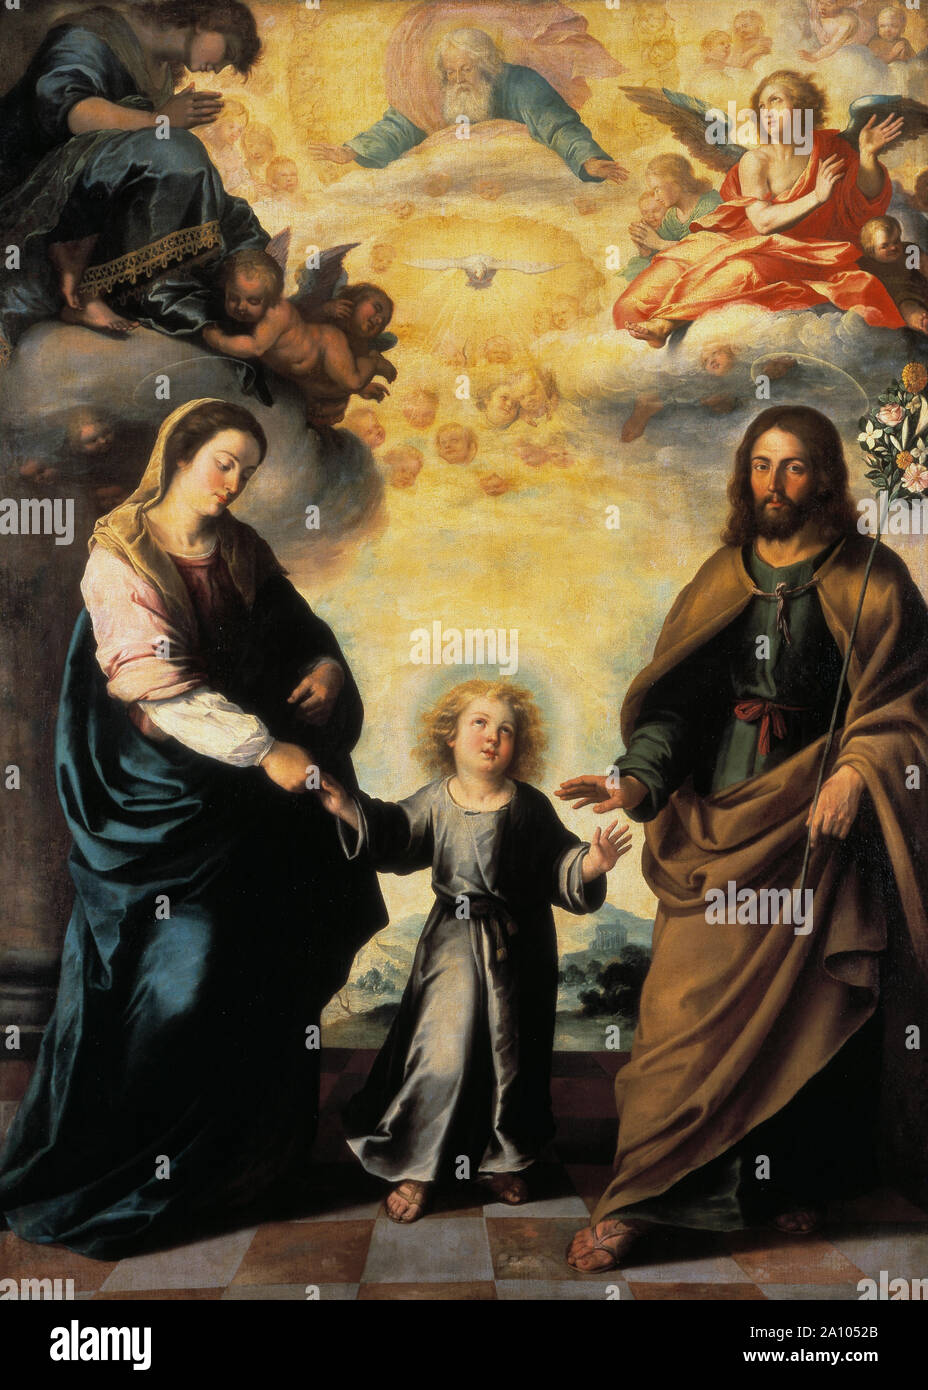 The Return of the Holy Family from Egypt - Bartolome Esteban Murillo, circa 1670 Stock Photo